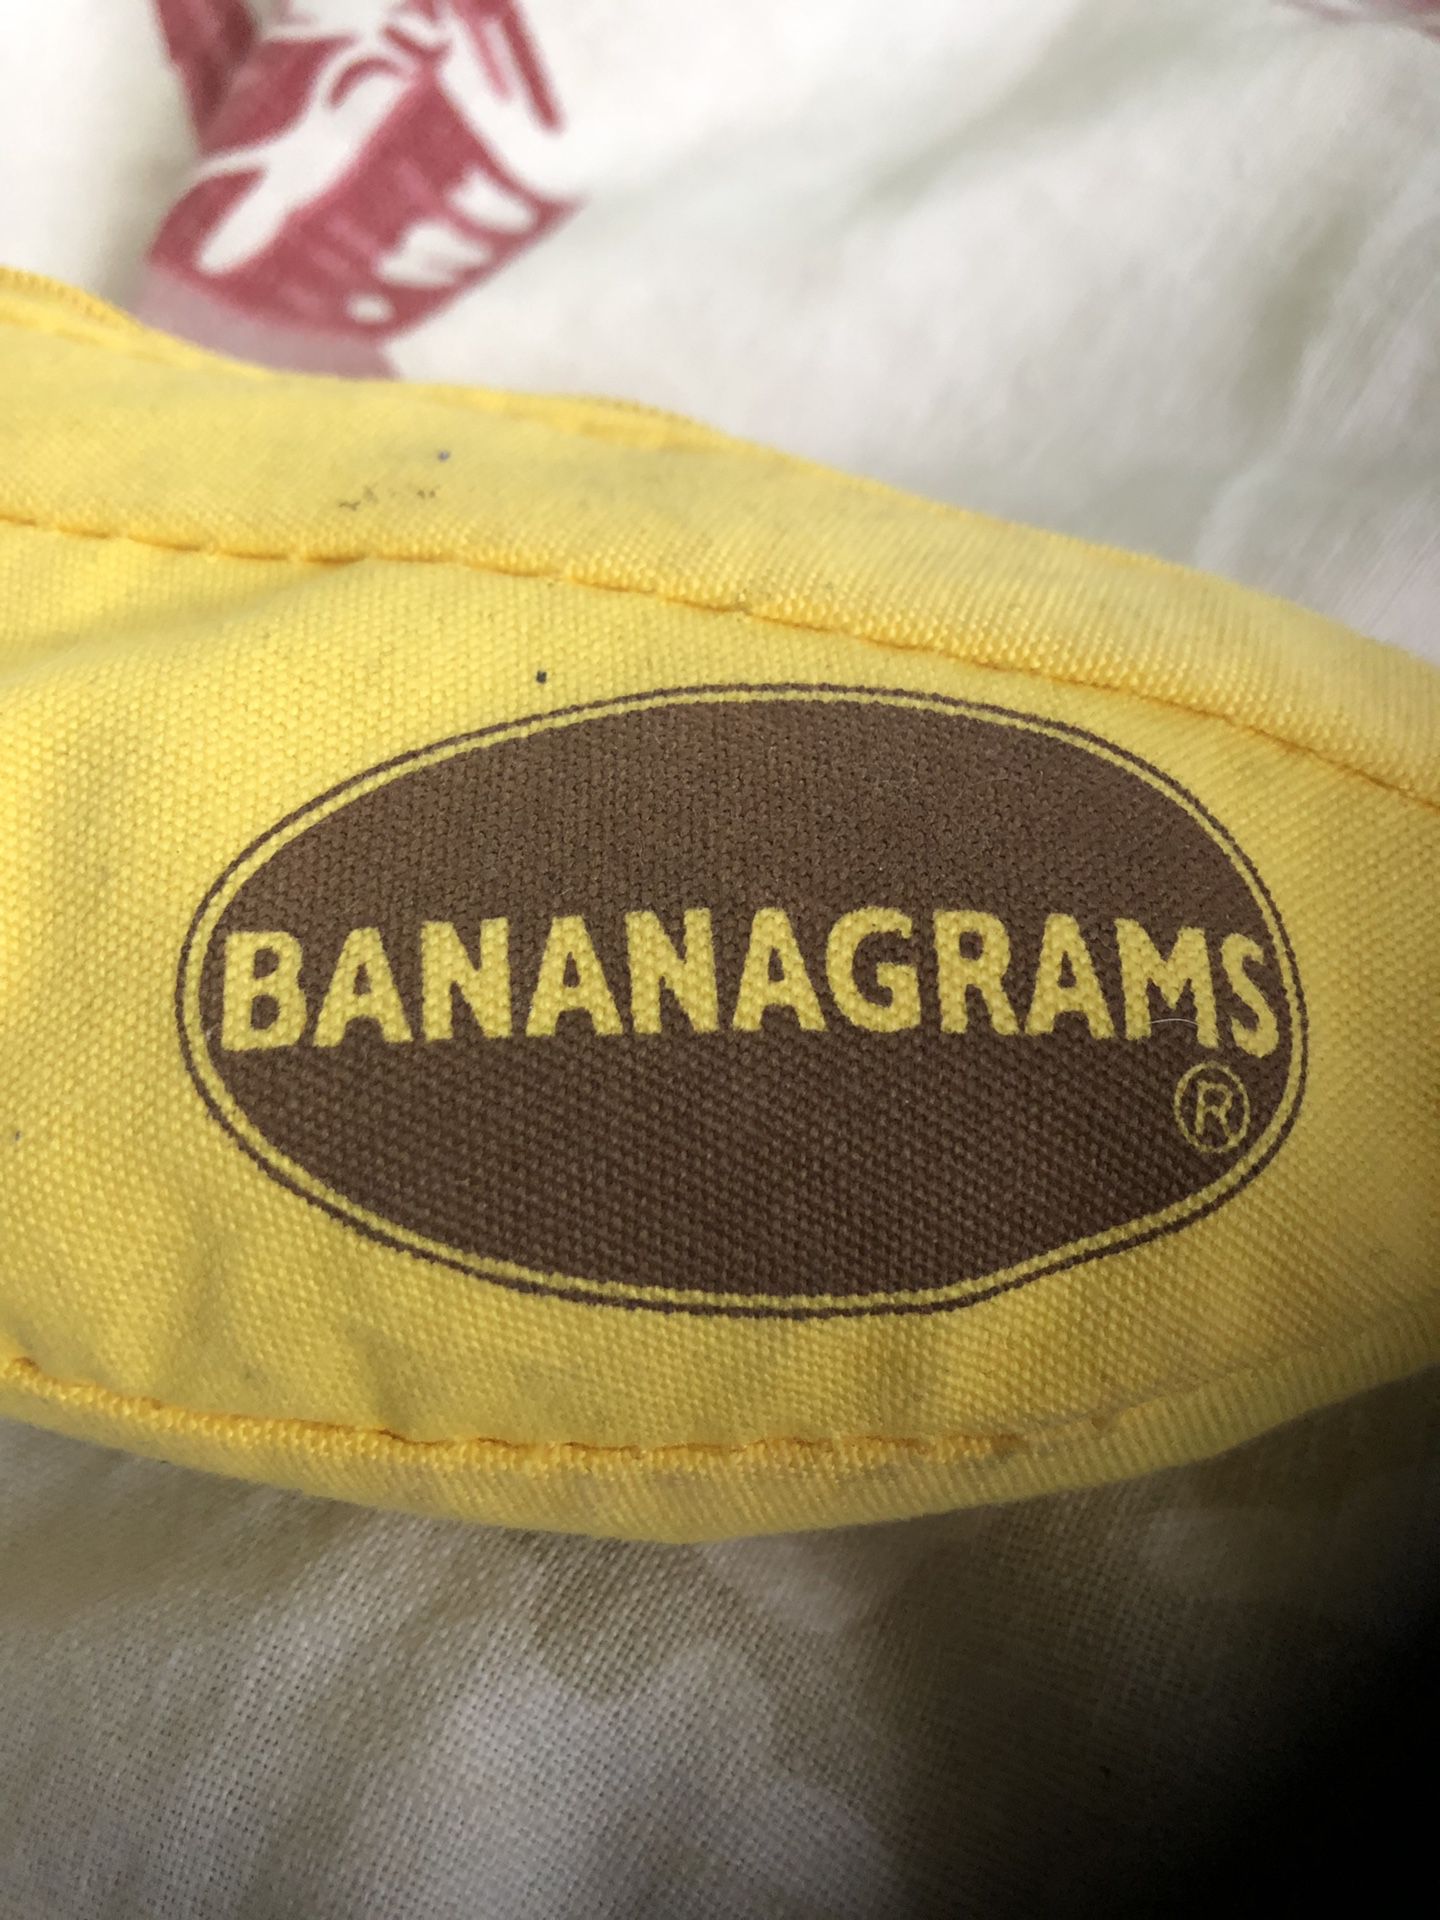 Bananagrams!